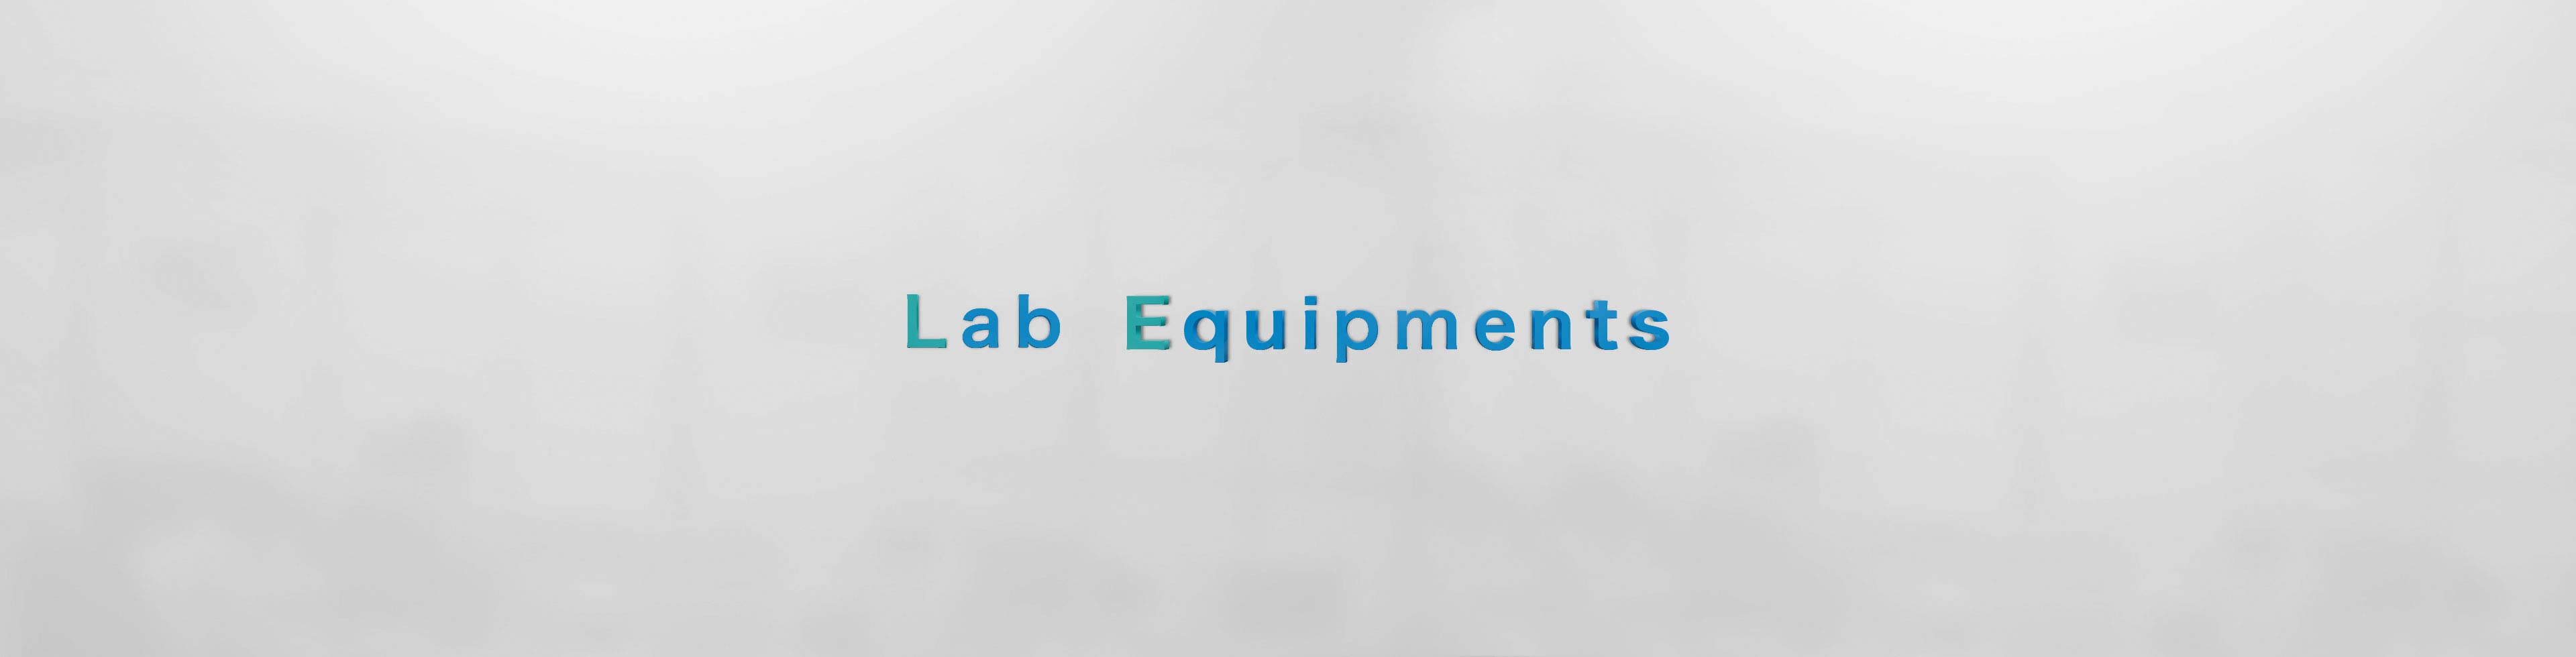 lab equipments made by immmac engineering company